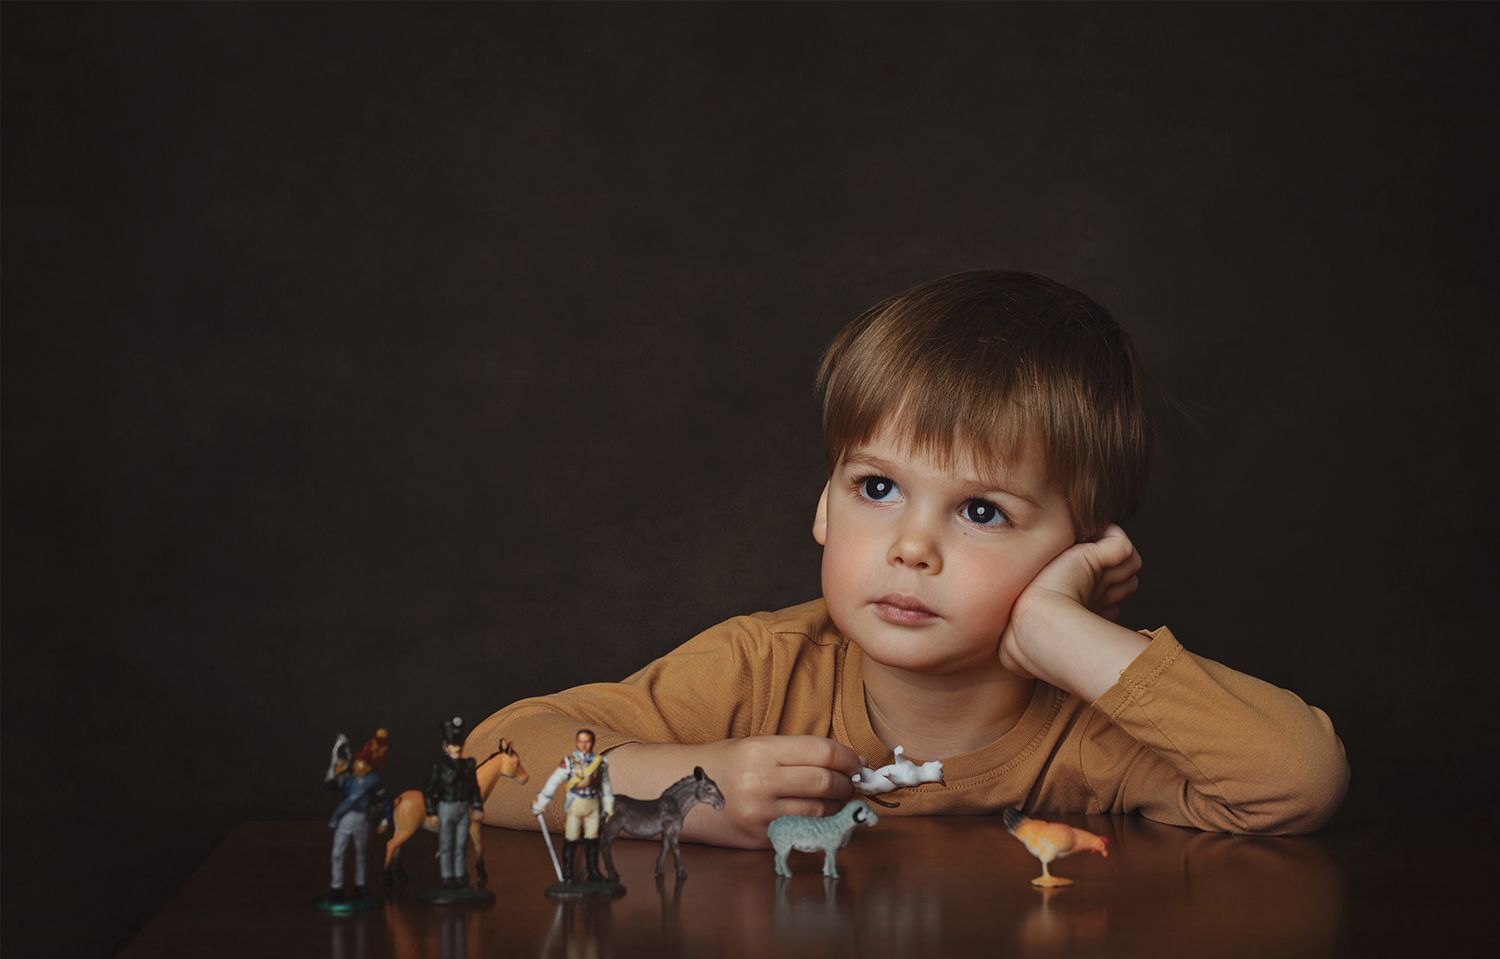 the boy with toys and the tin soldiers. мальчик с игрушками и оловянными солдатиками, Владимирова Оксана